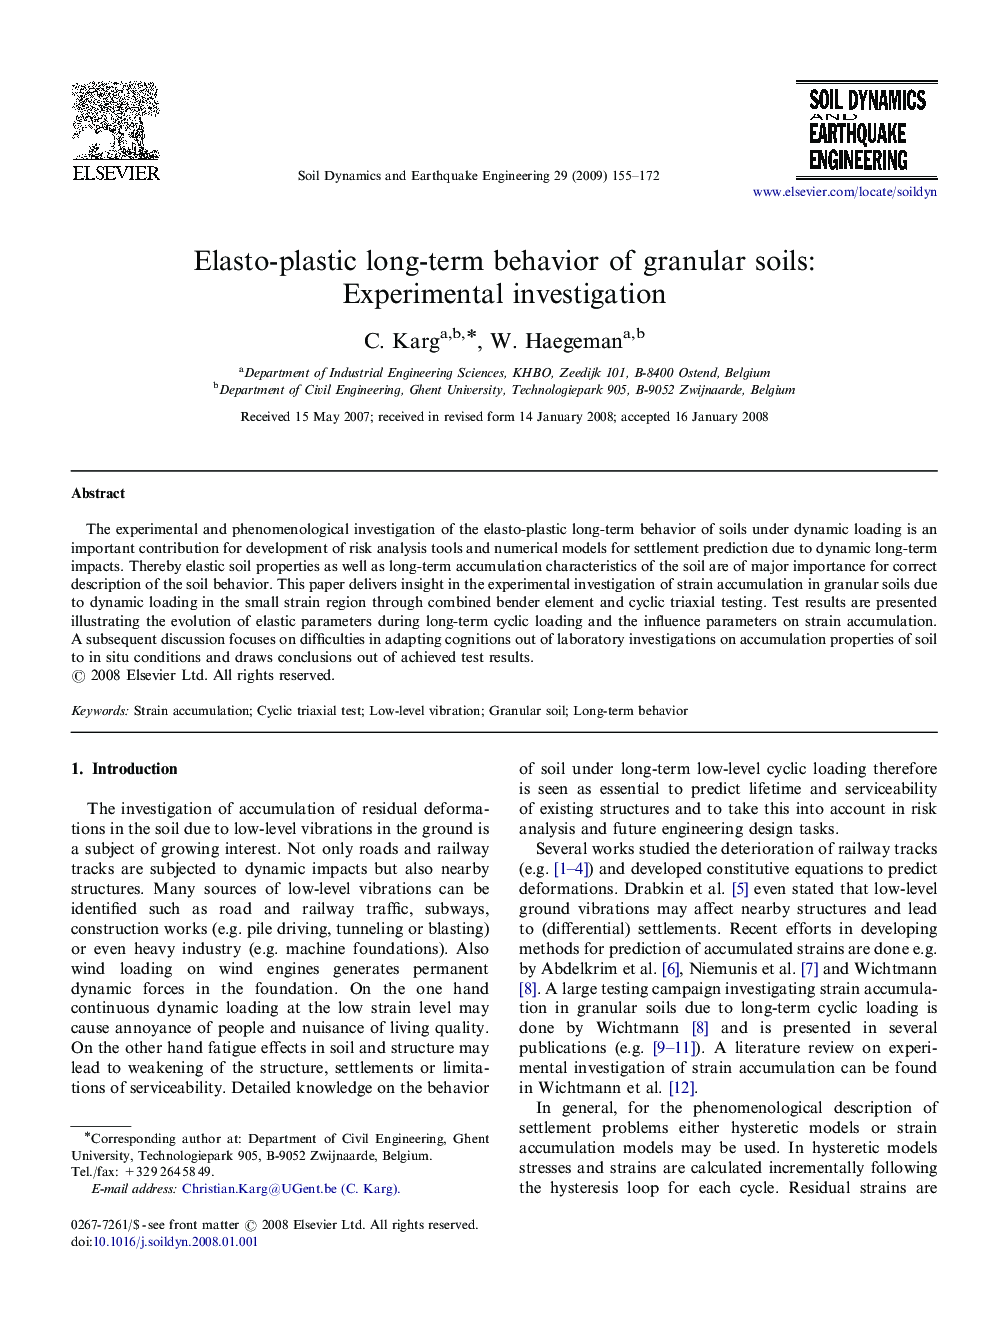 Elasto-plastic long-term behavior of granular soils: Experimental investigation